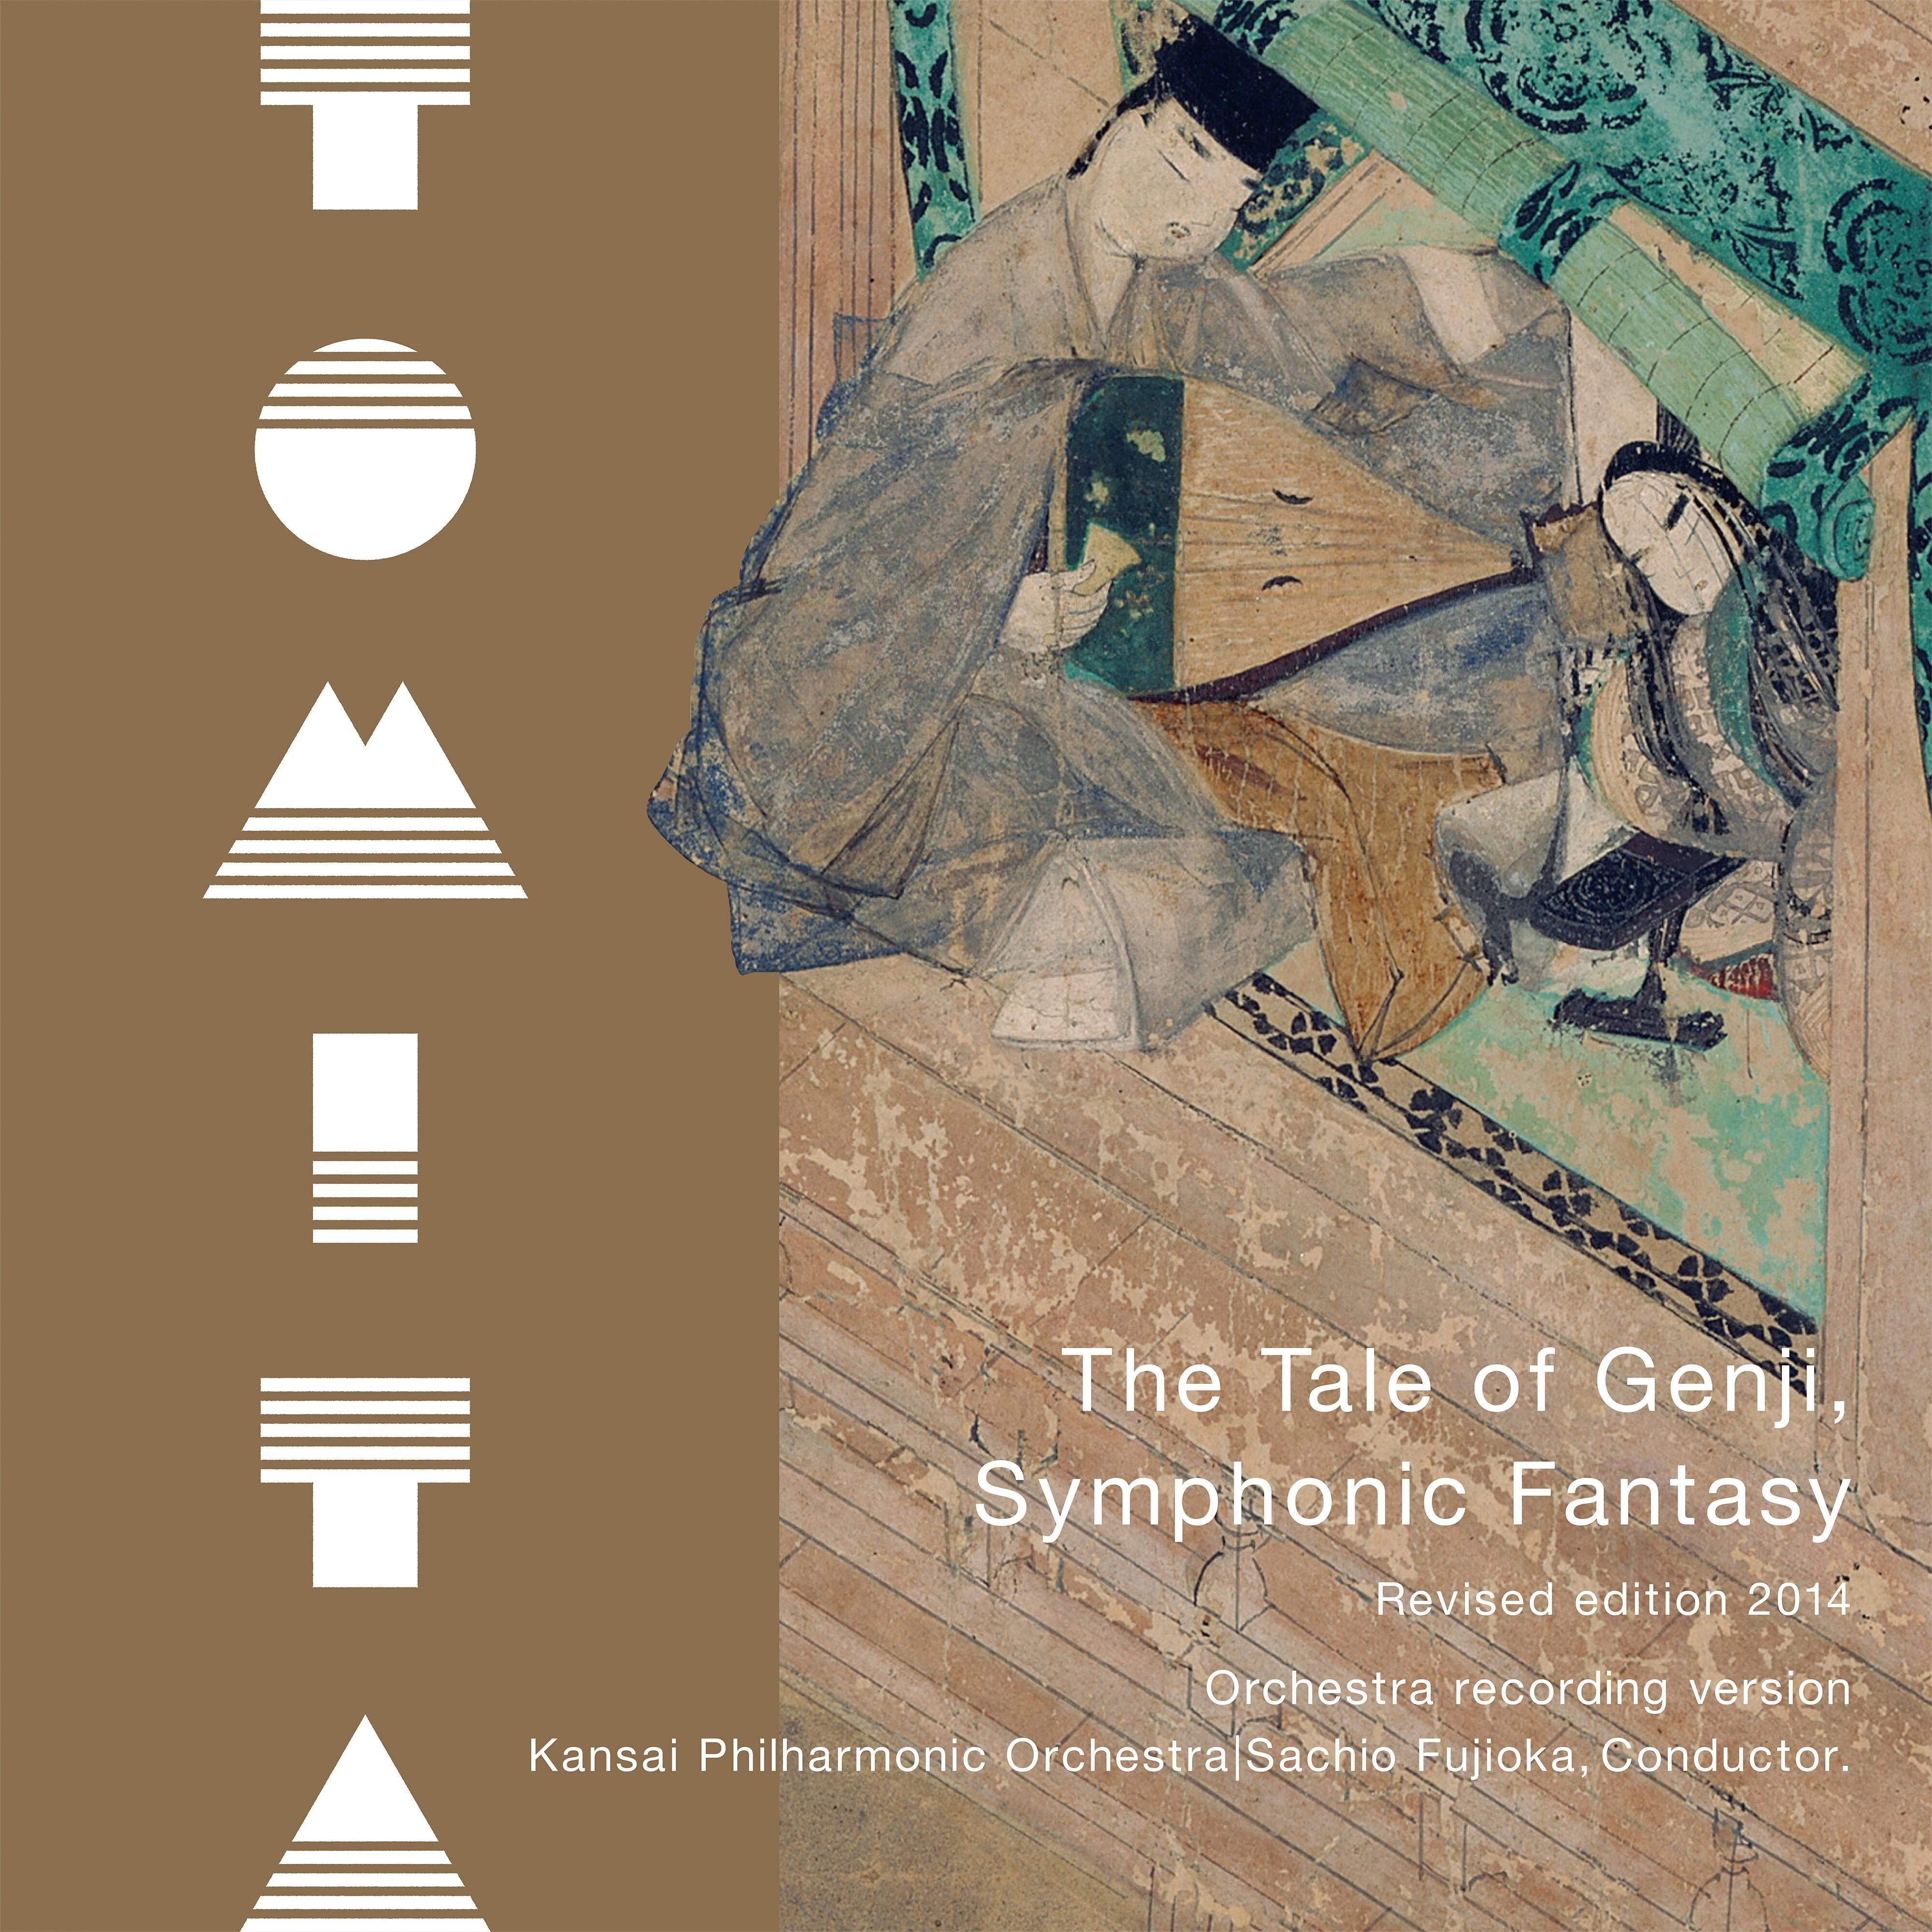 Isao Tomita - Tale of Genji - Symphonic Fantasy 24-192